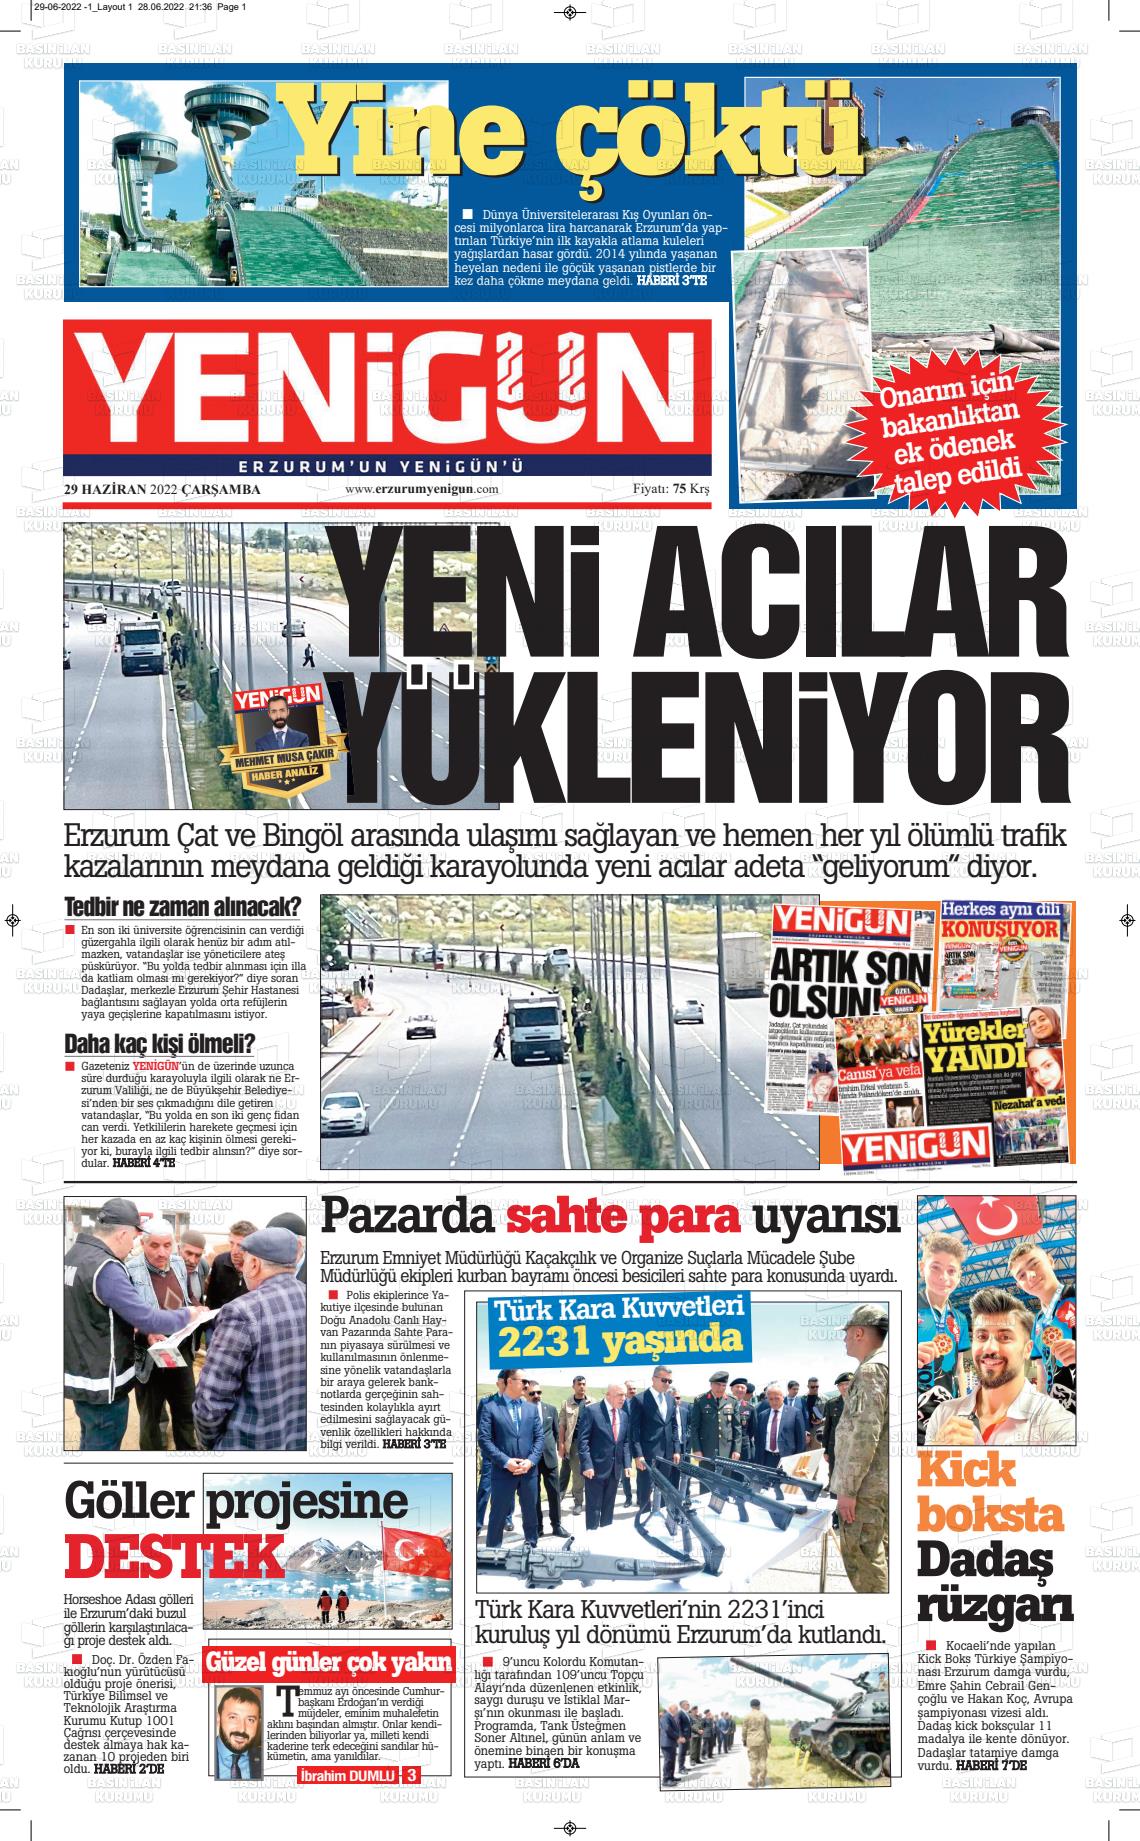 29 Haziran 2022 Erzurum Yenigün Gazete Manşeti